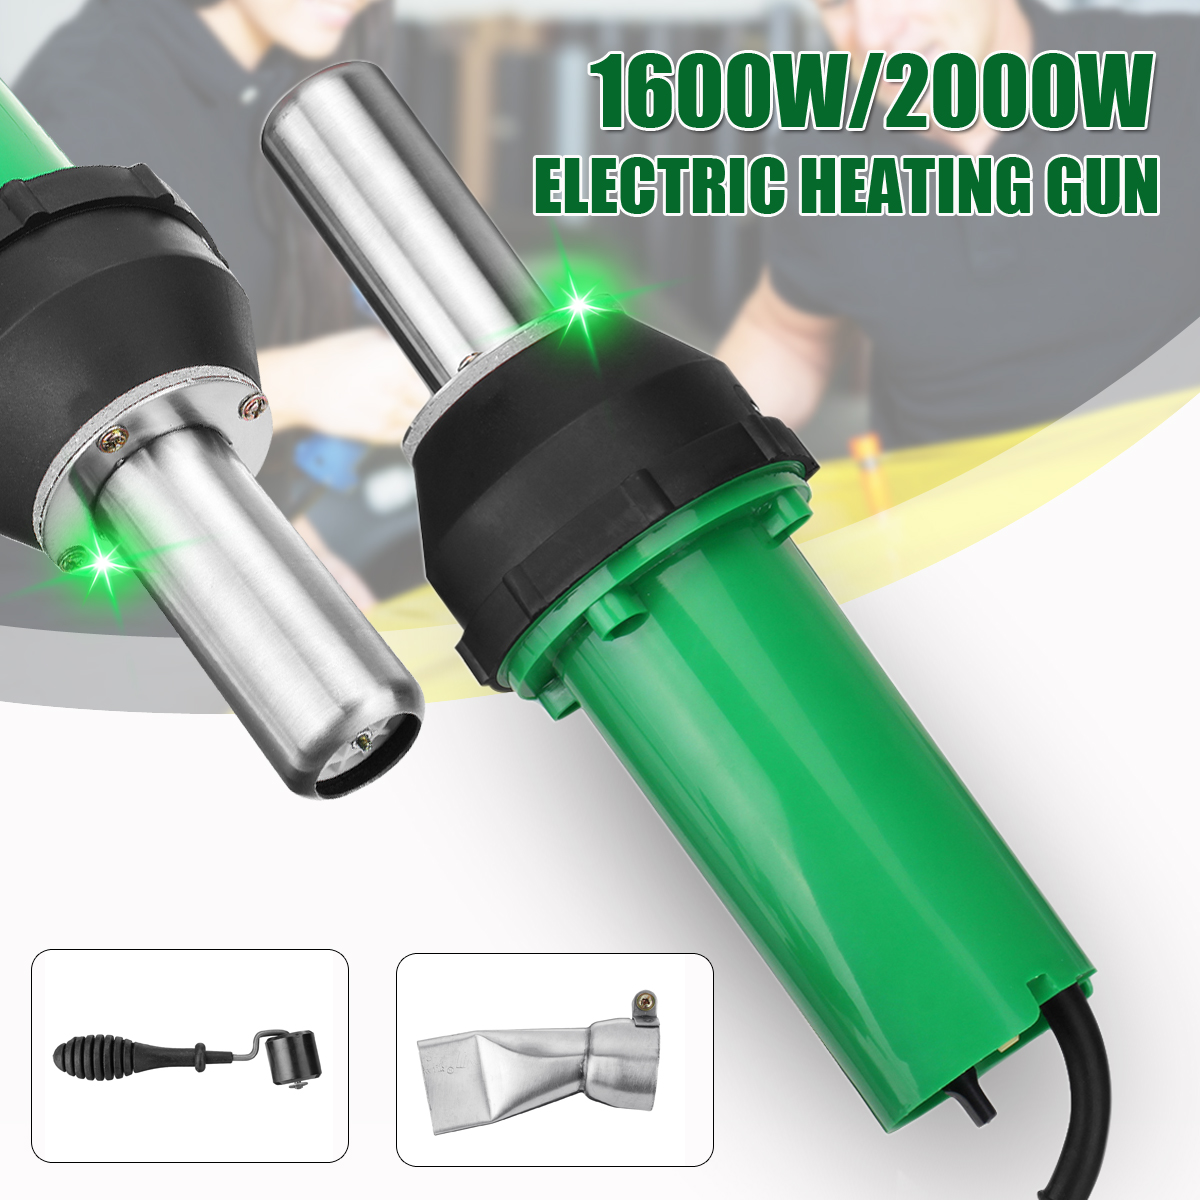 1600W2000W-220V-Electric-Corded-Hot-Air-Gun-Heat-Tool-Welding-Heating-Welders-Workshop-Tool-1808589-1